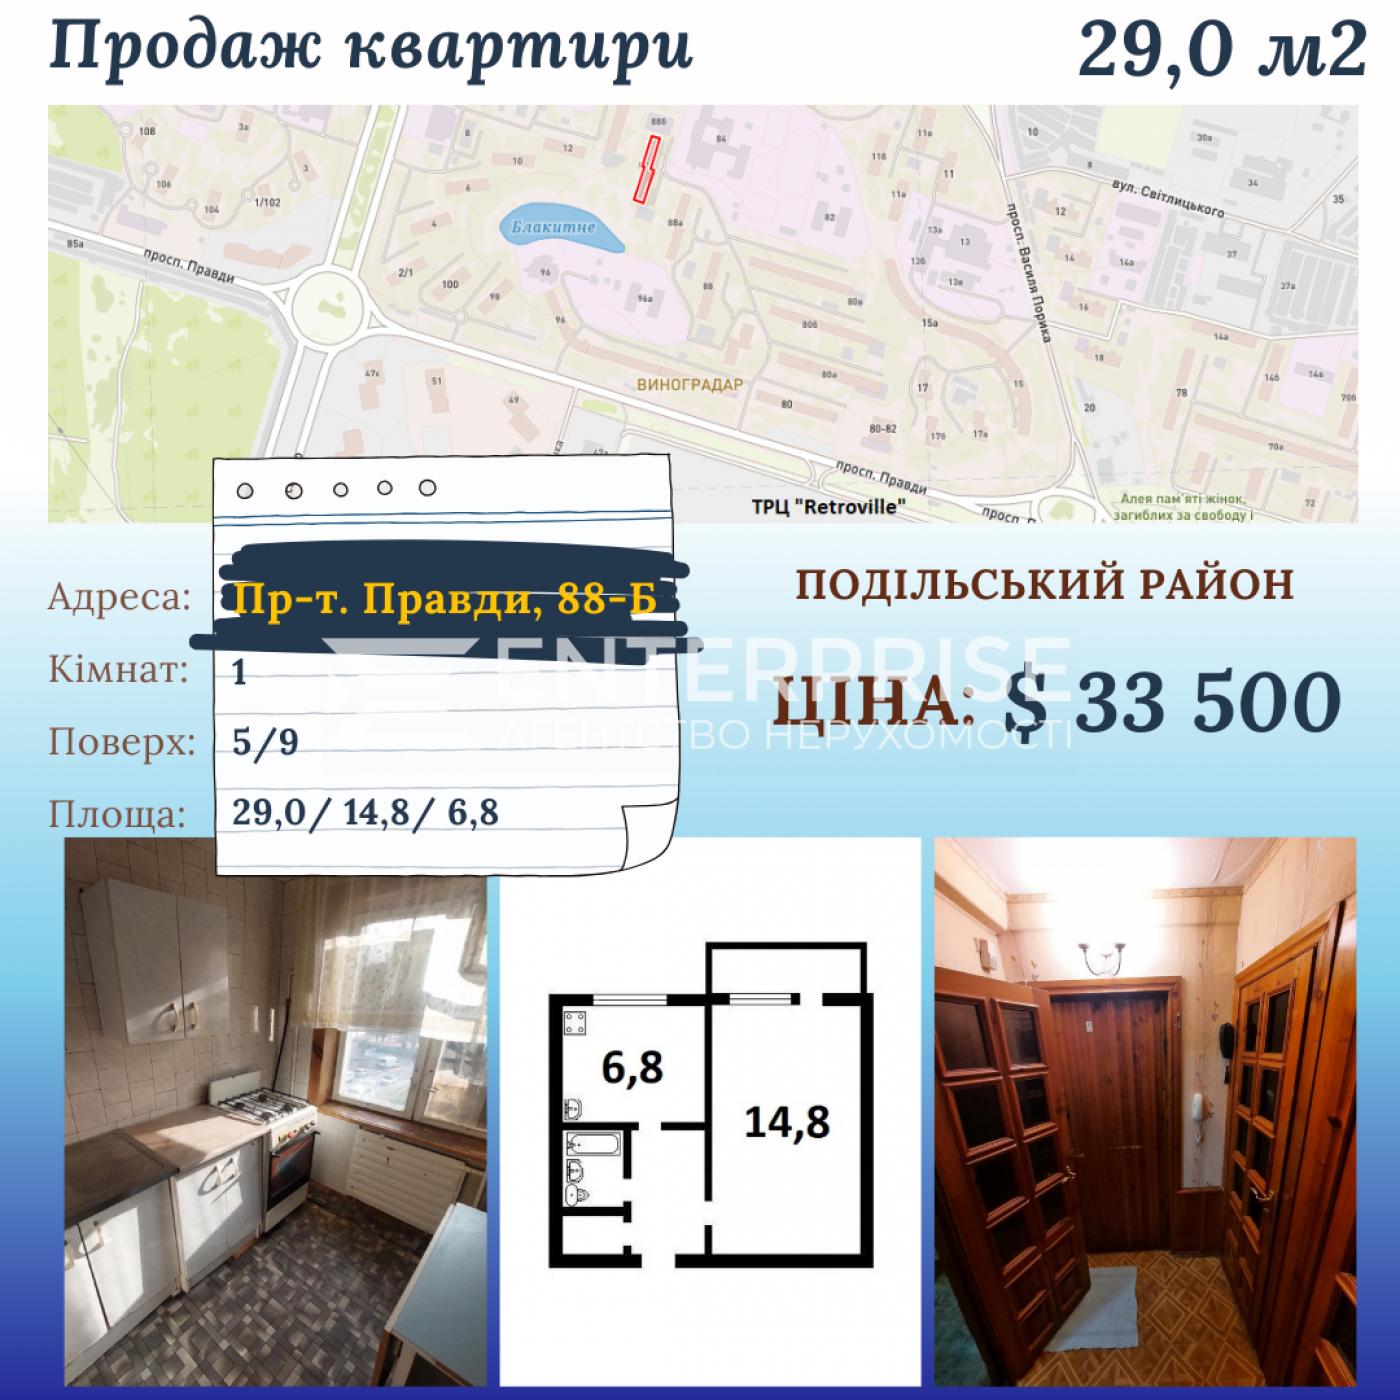 продам 1-комнатную квартиру Киев, ул.Правды , д. 88Б - Фото 1